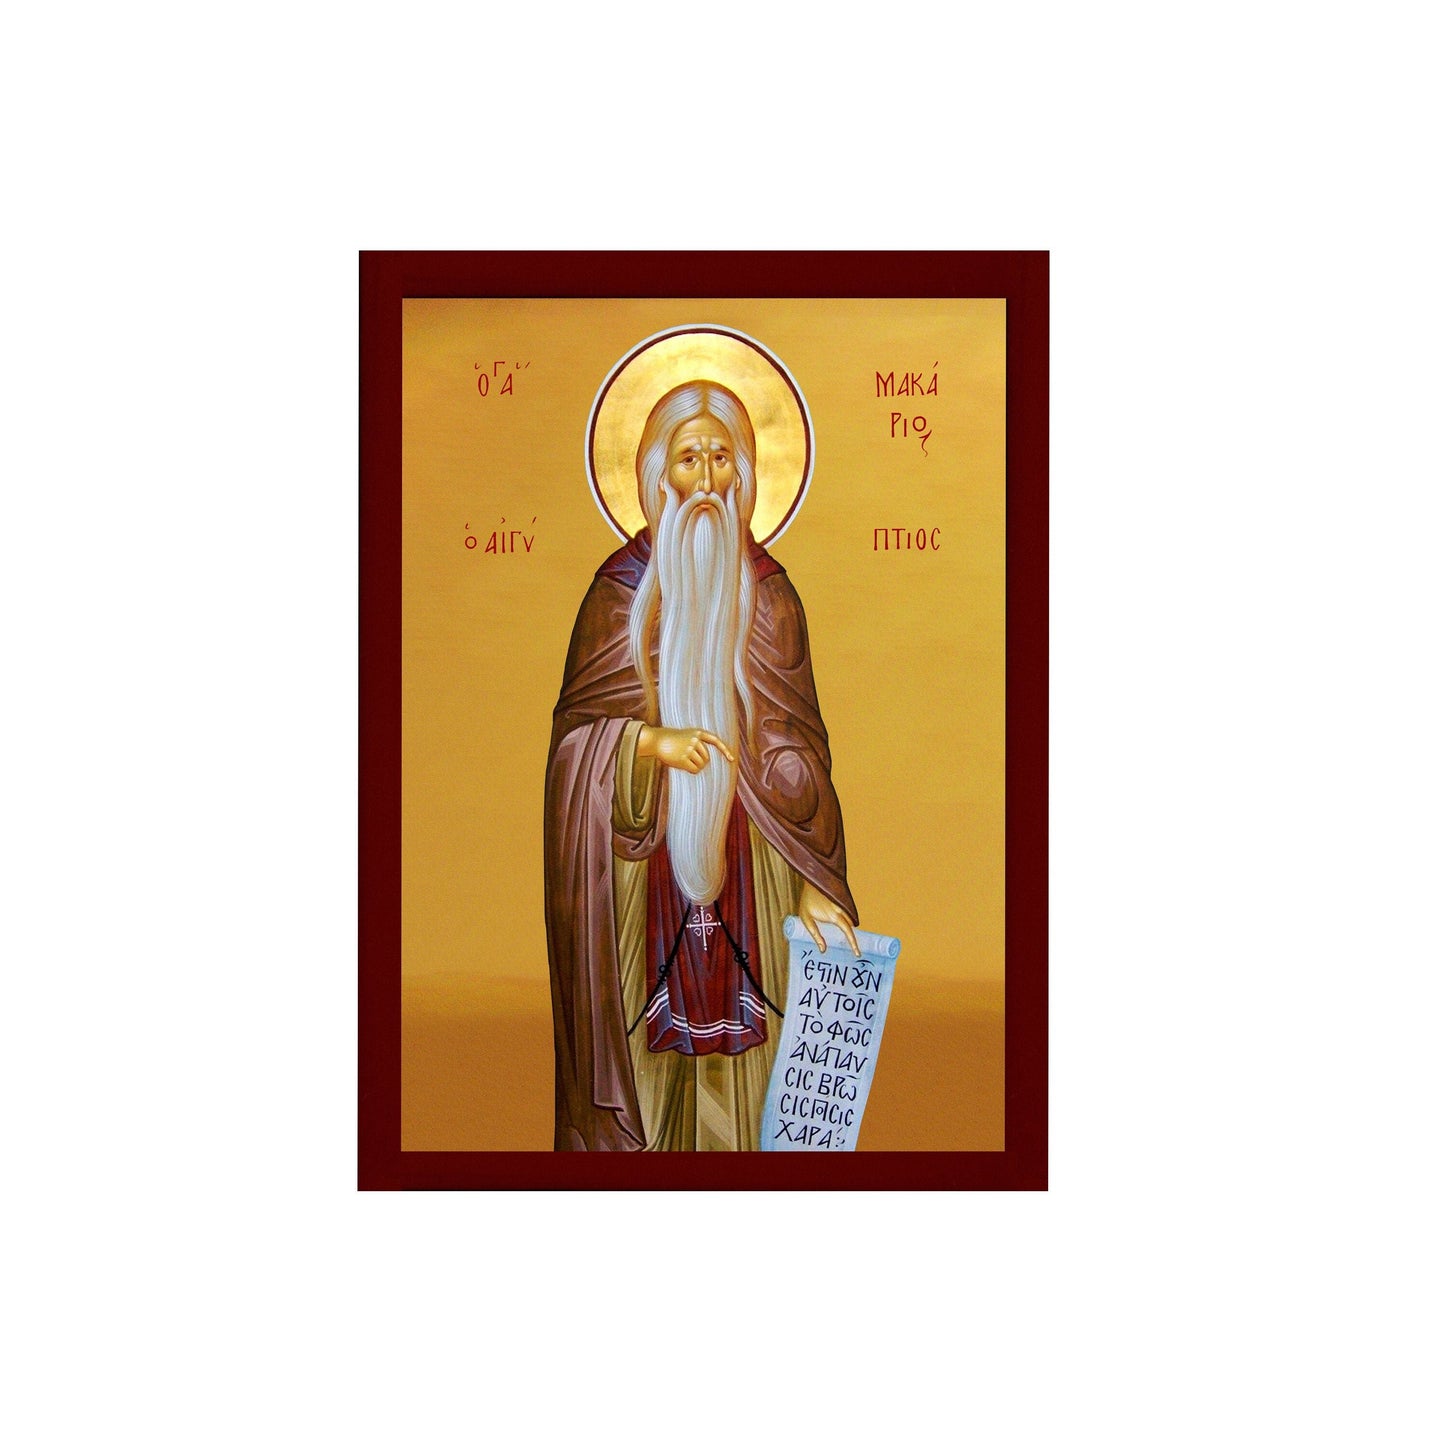 Saint Macarius icon, Handmade Greek Orthodox icon St Makarios of Egypt, Byzantine art wall hanging wood plaque, religious gift TheHolyArt